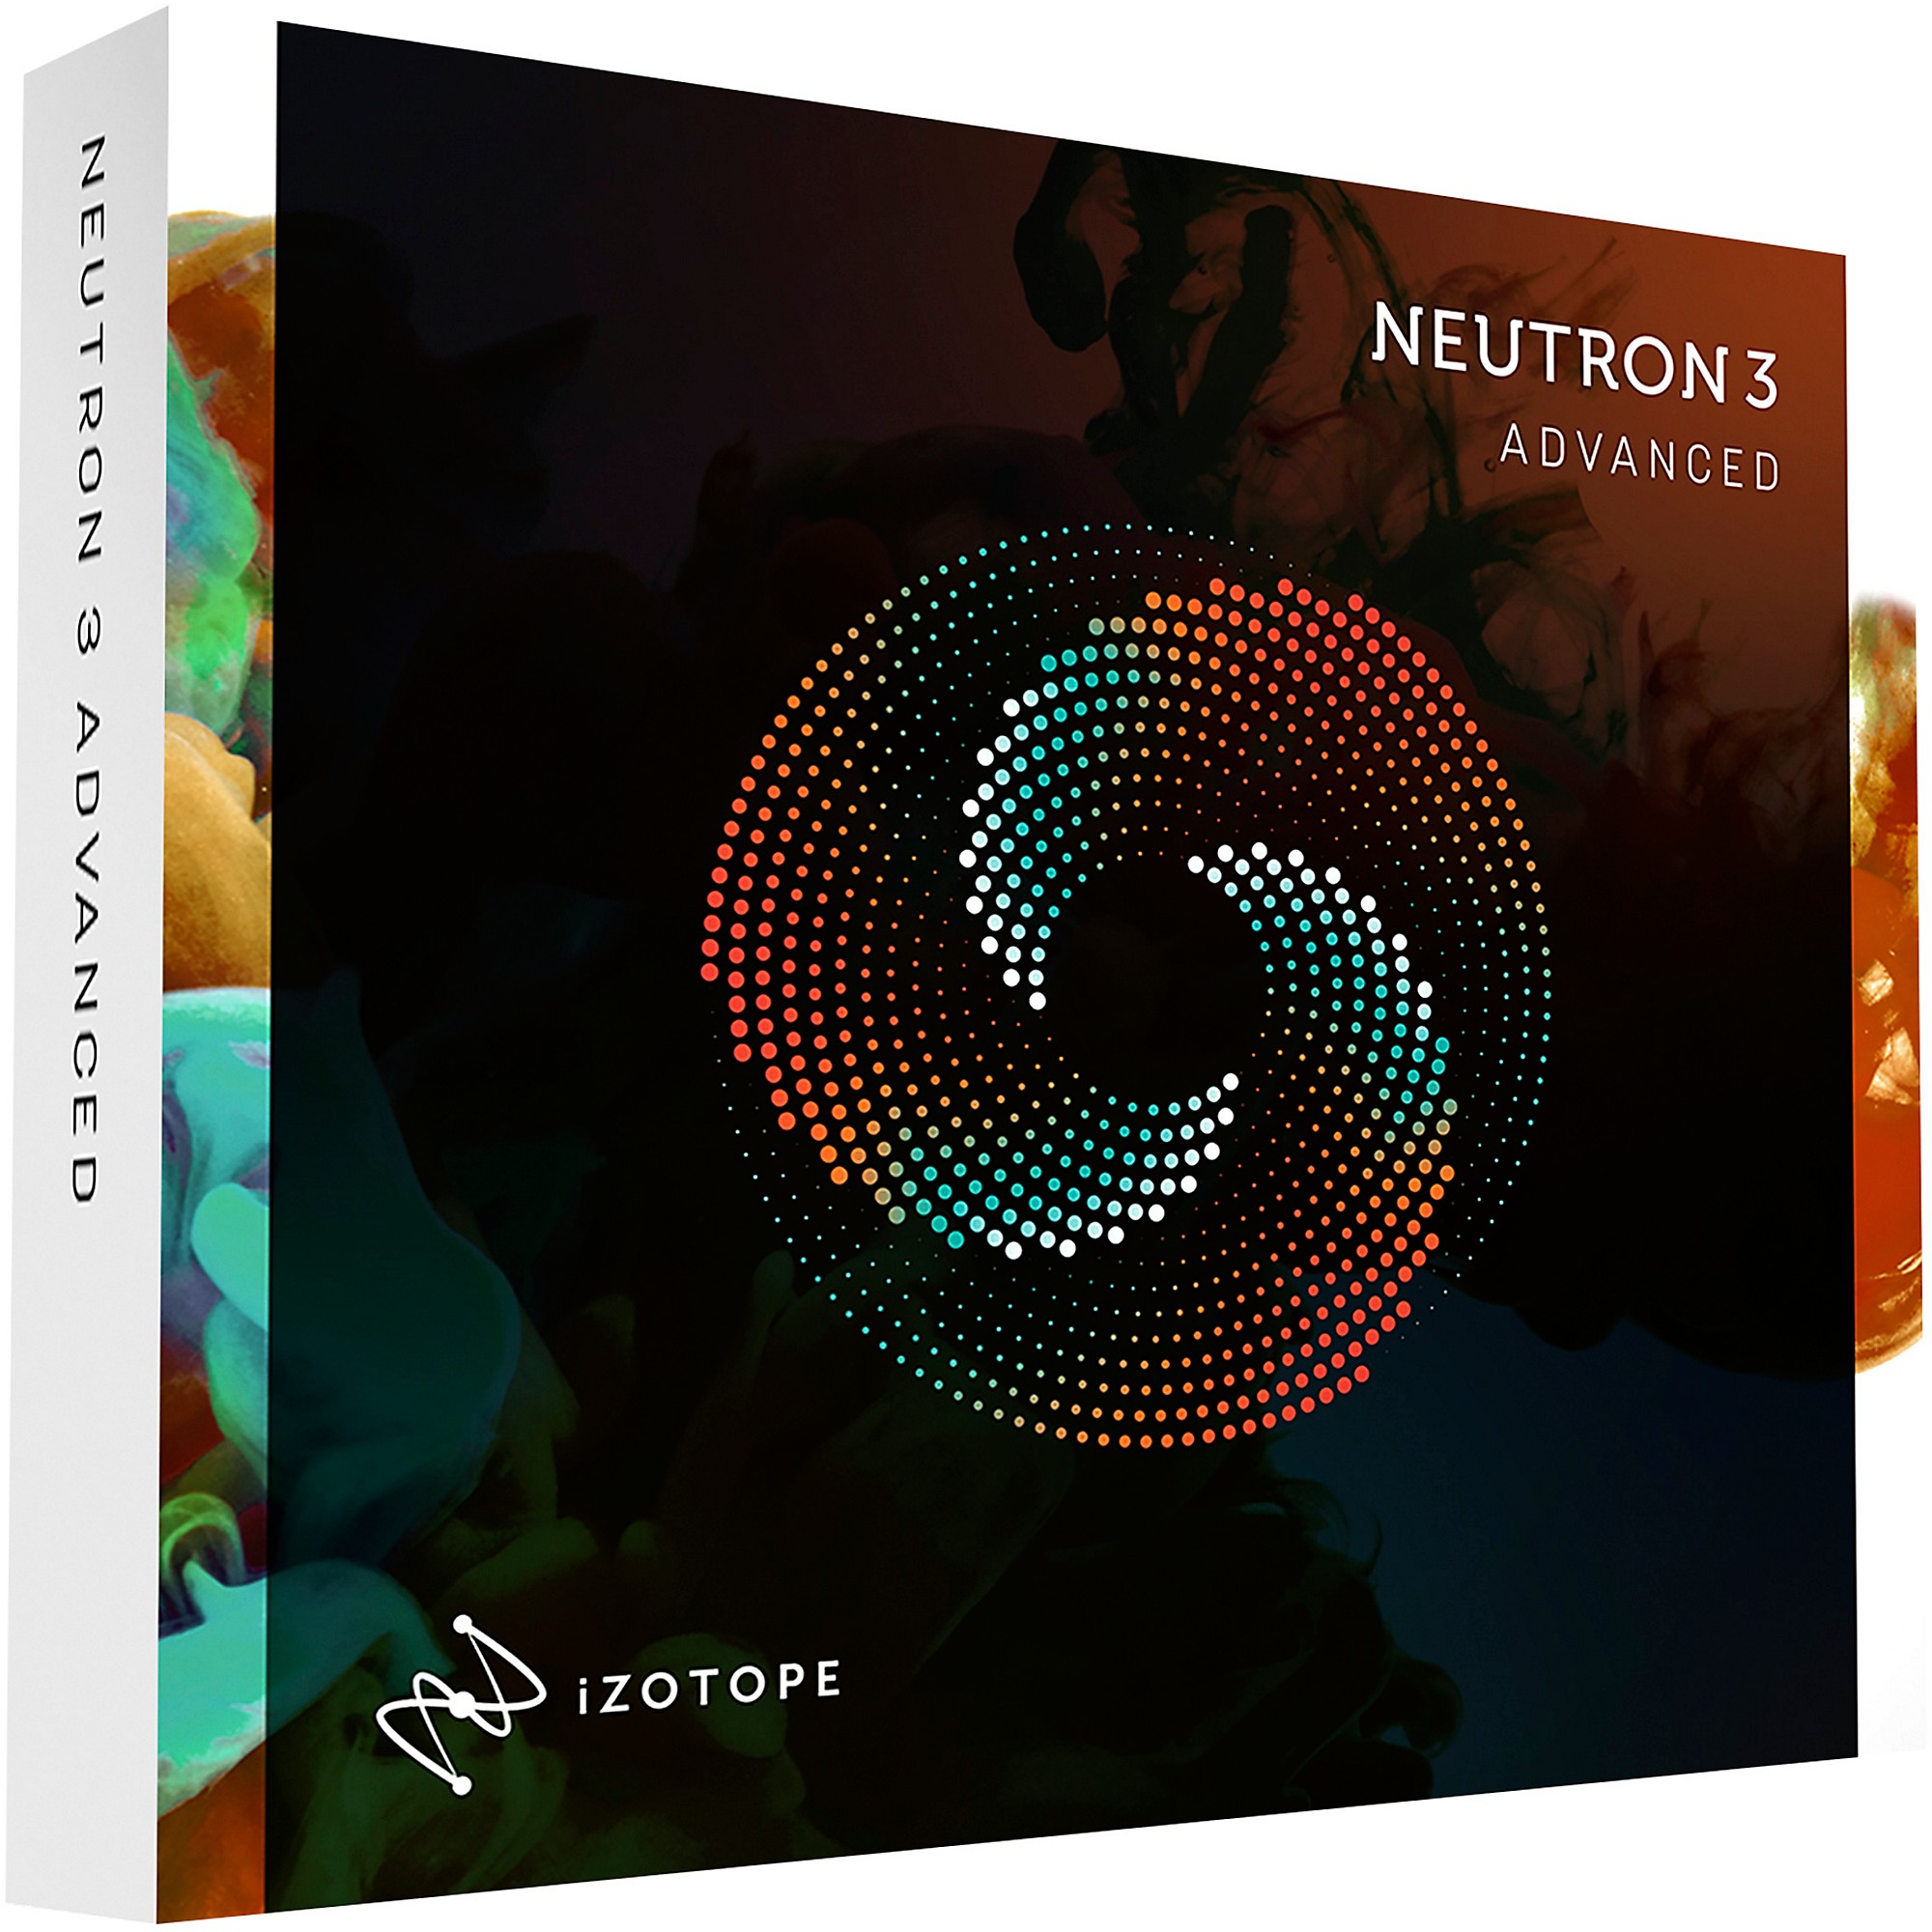 neutron 3 standard